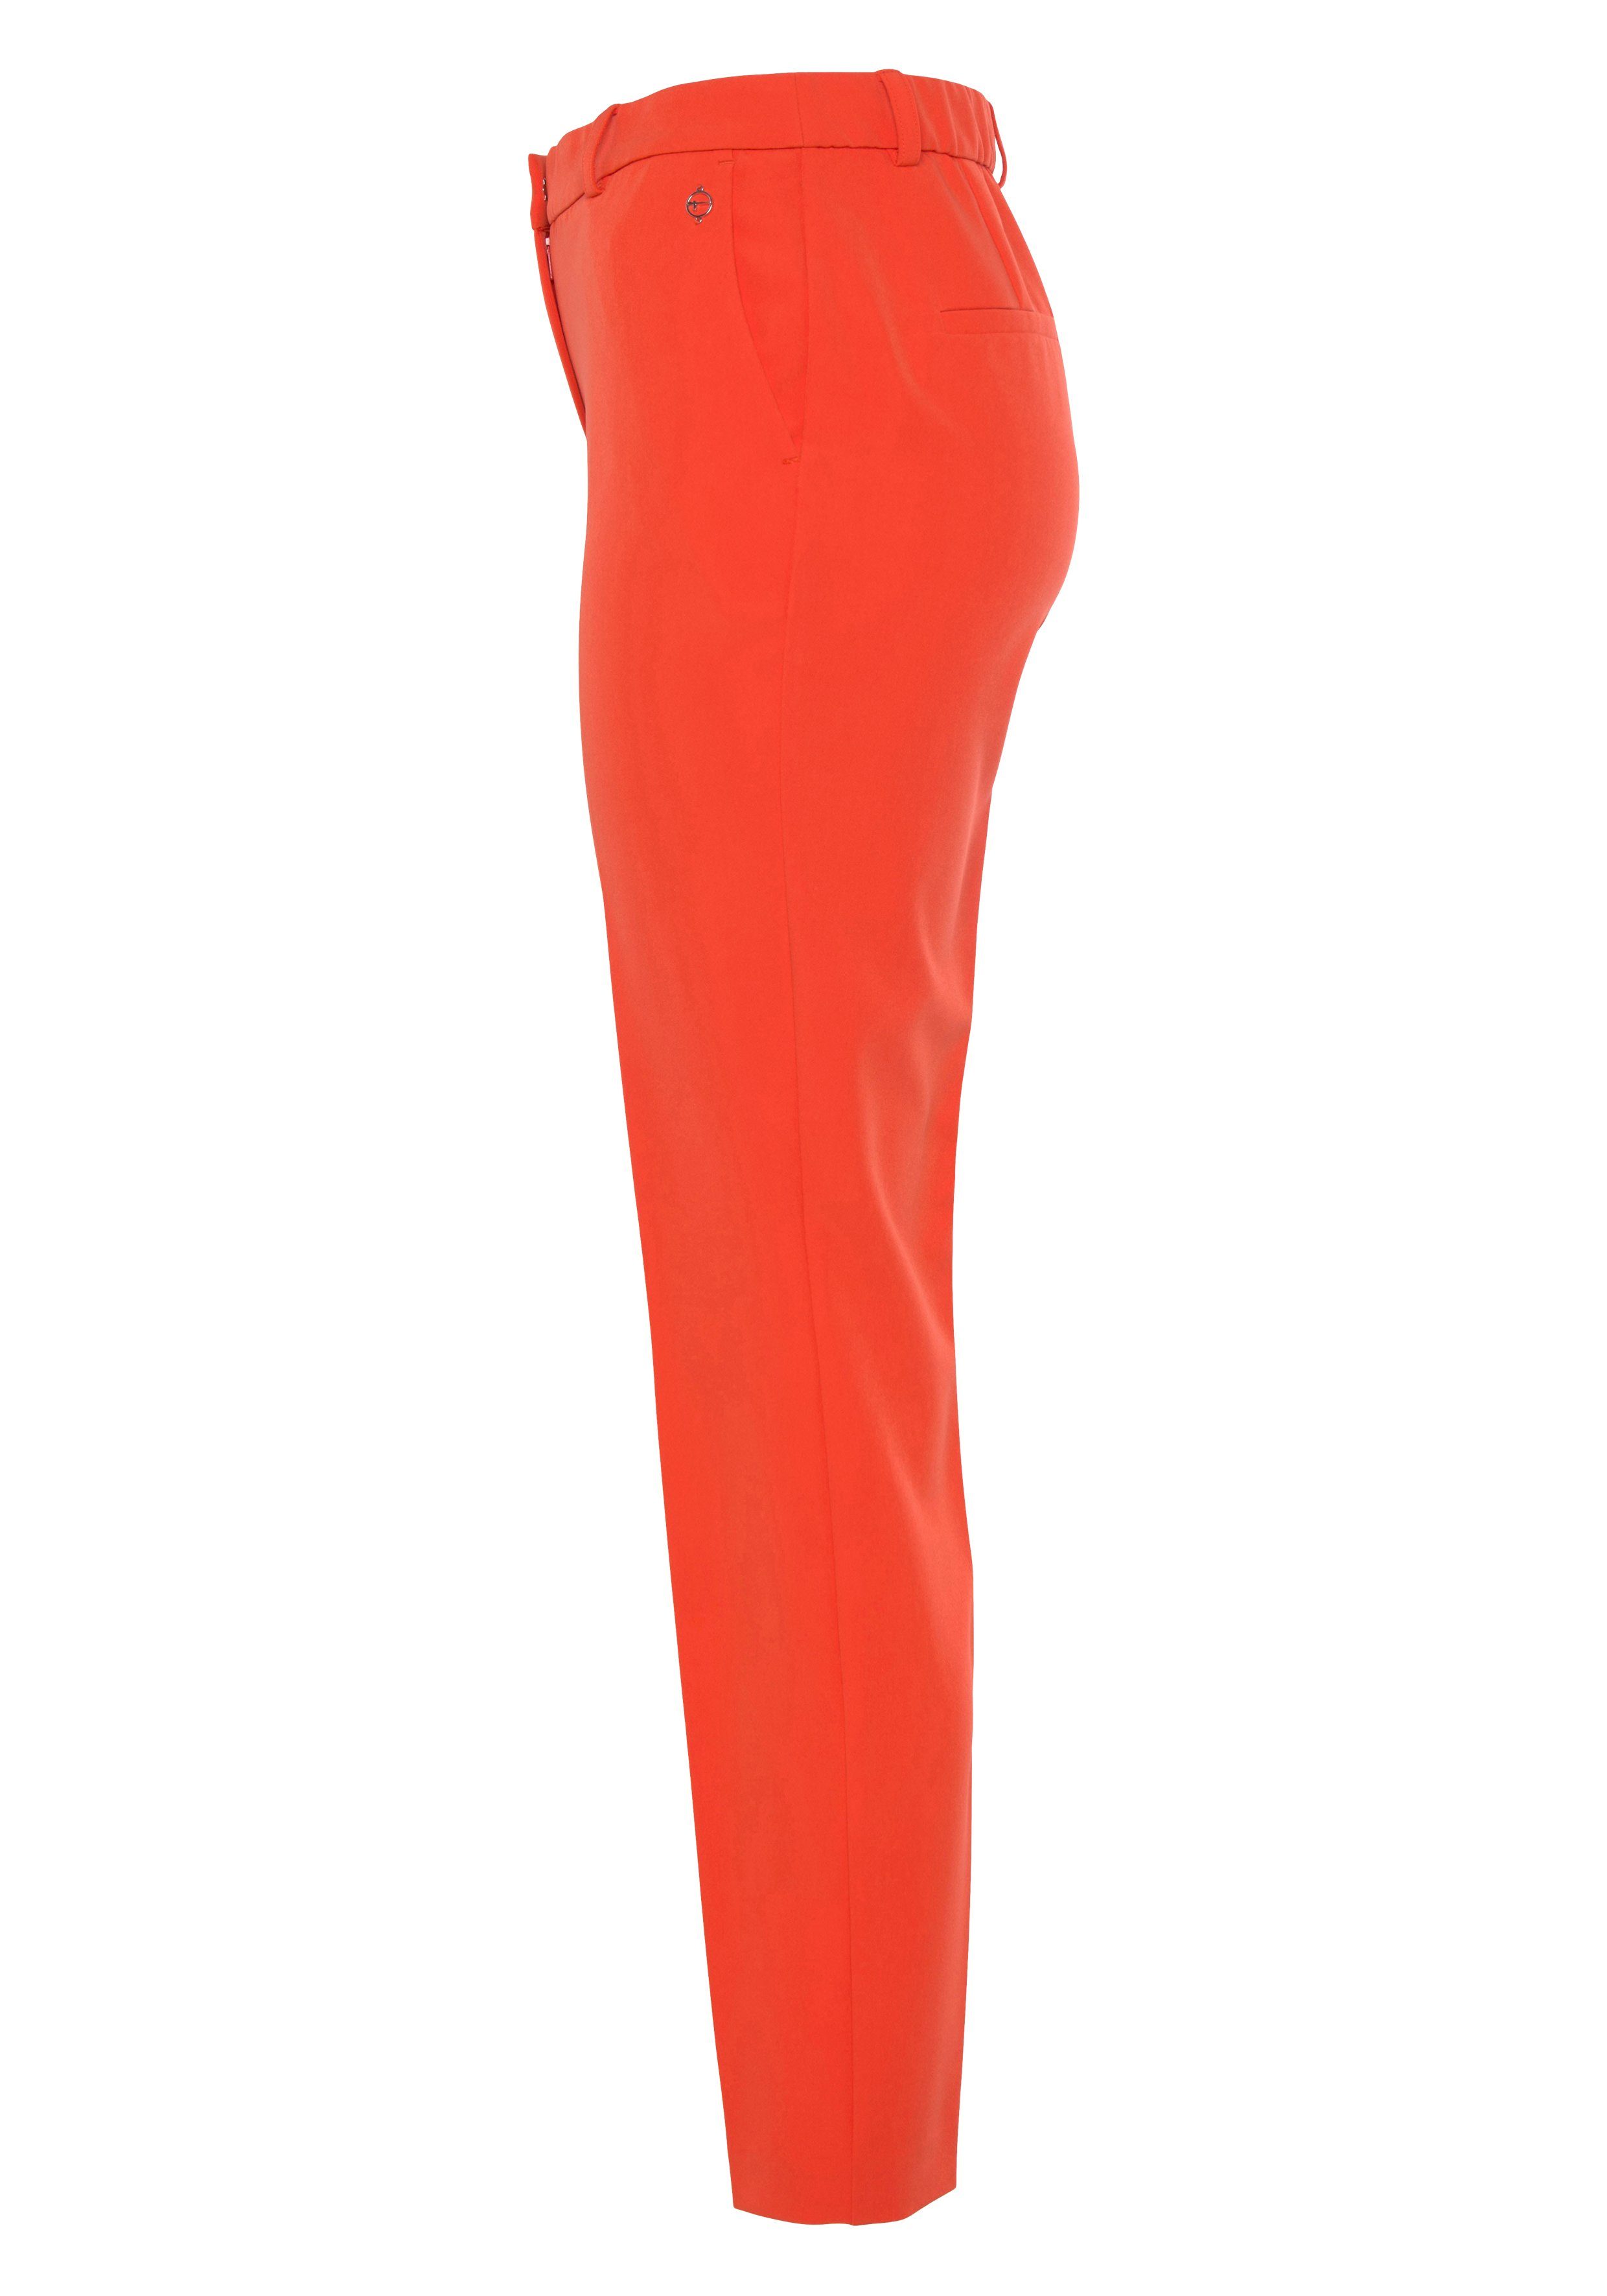 Anzughose Material) in Trendfarben Tamaris (Hose aus orange nachhaltigem